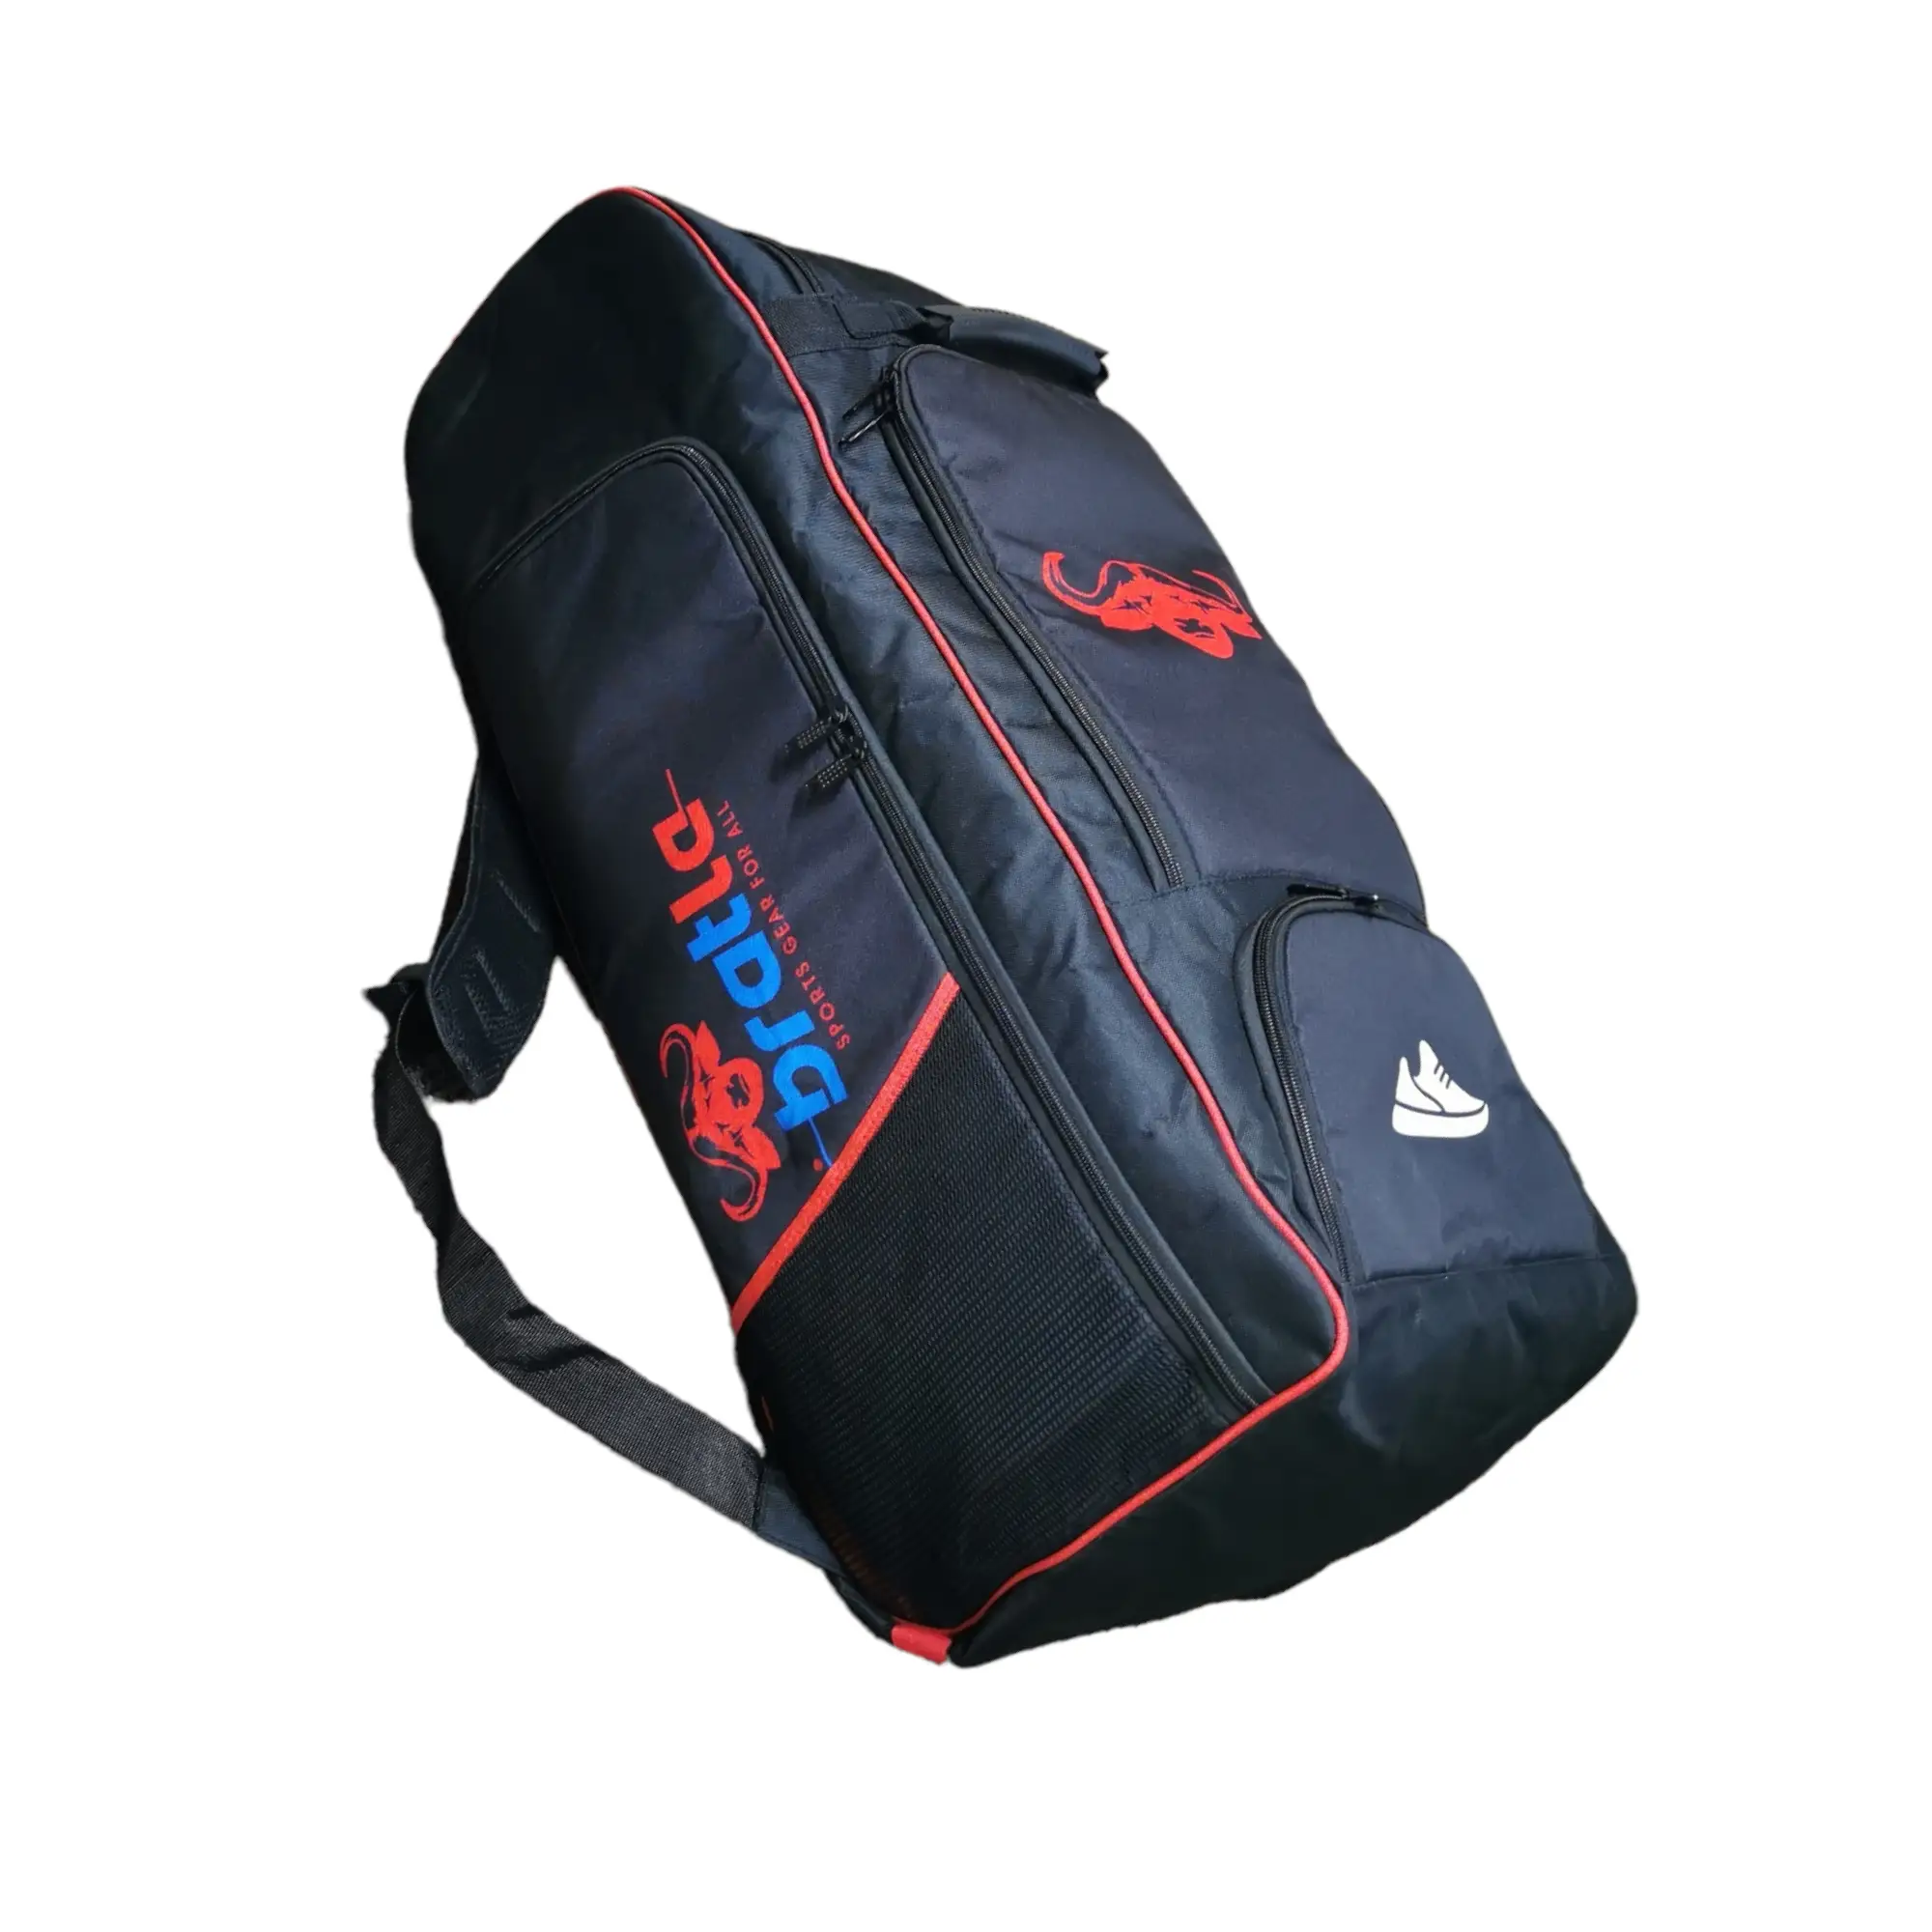 Bratla Pro Plus Cricket Kit Bag Duffle for Full Size Kit with 6 Pockets Black/Red - BAG - PERSONAL